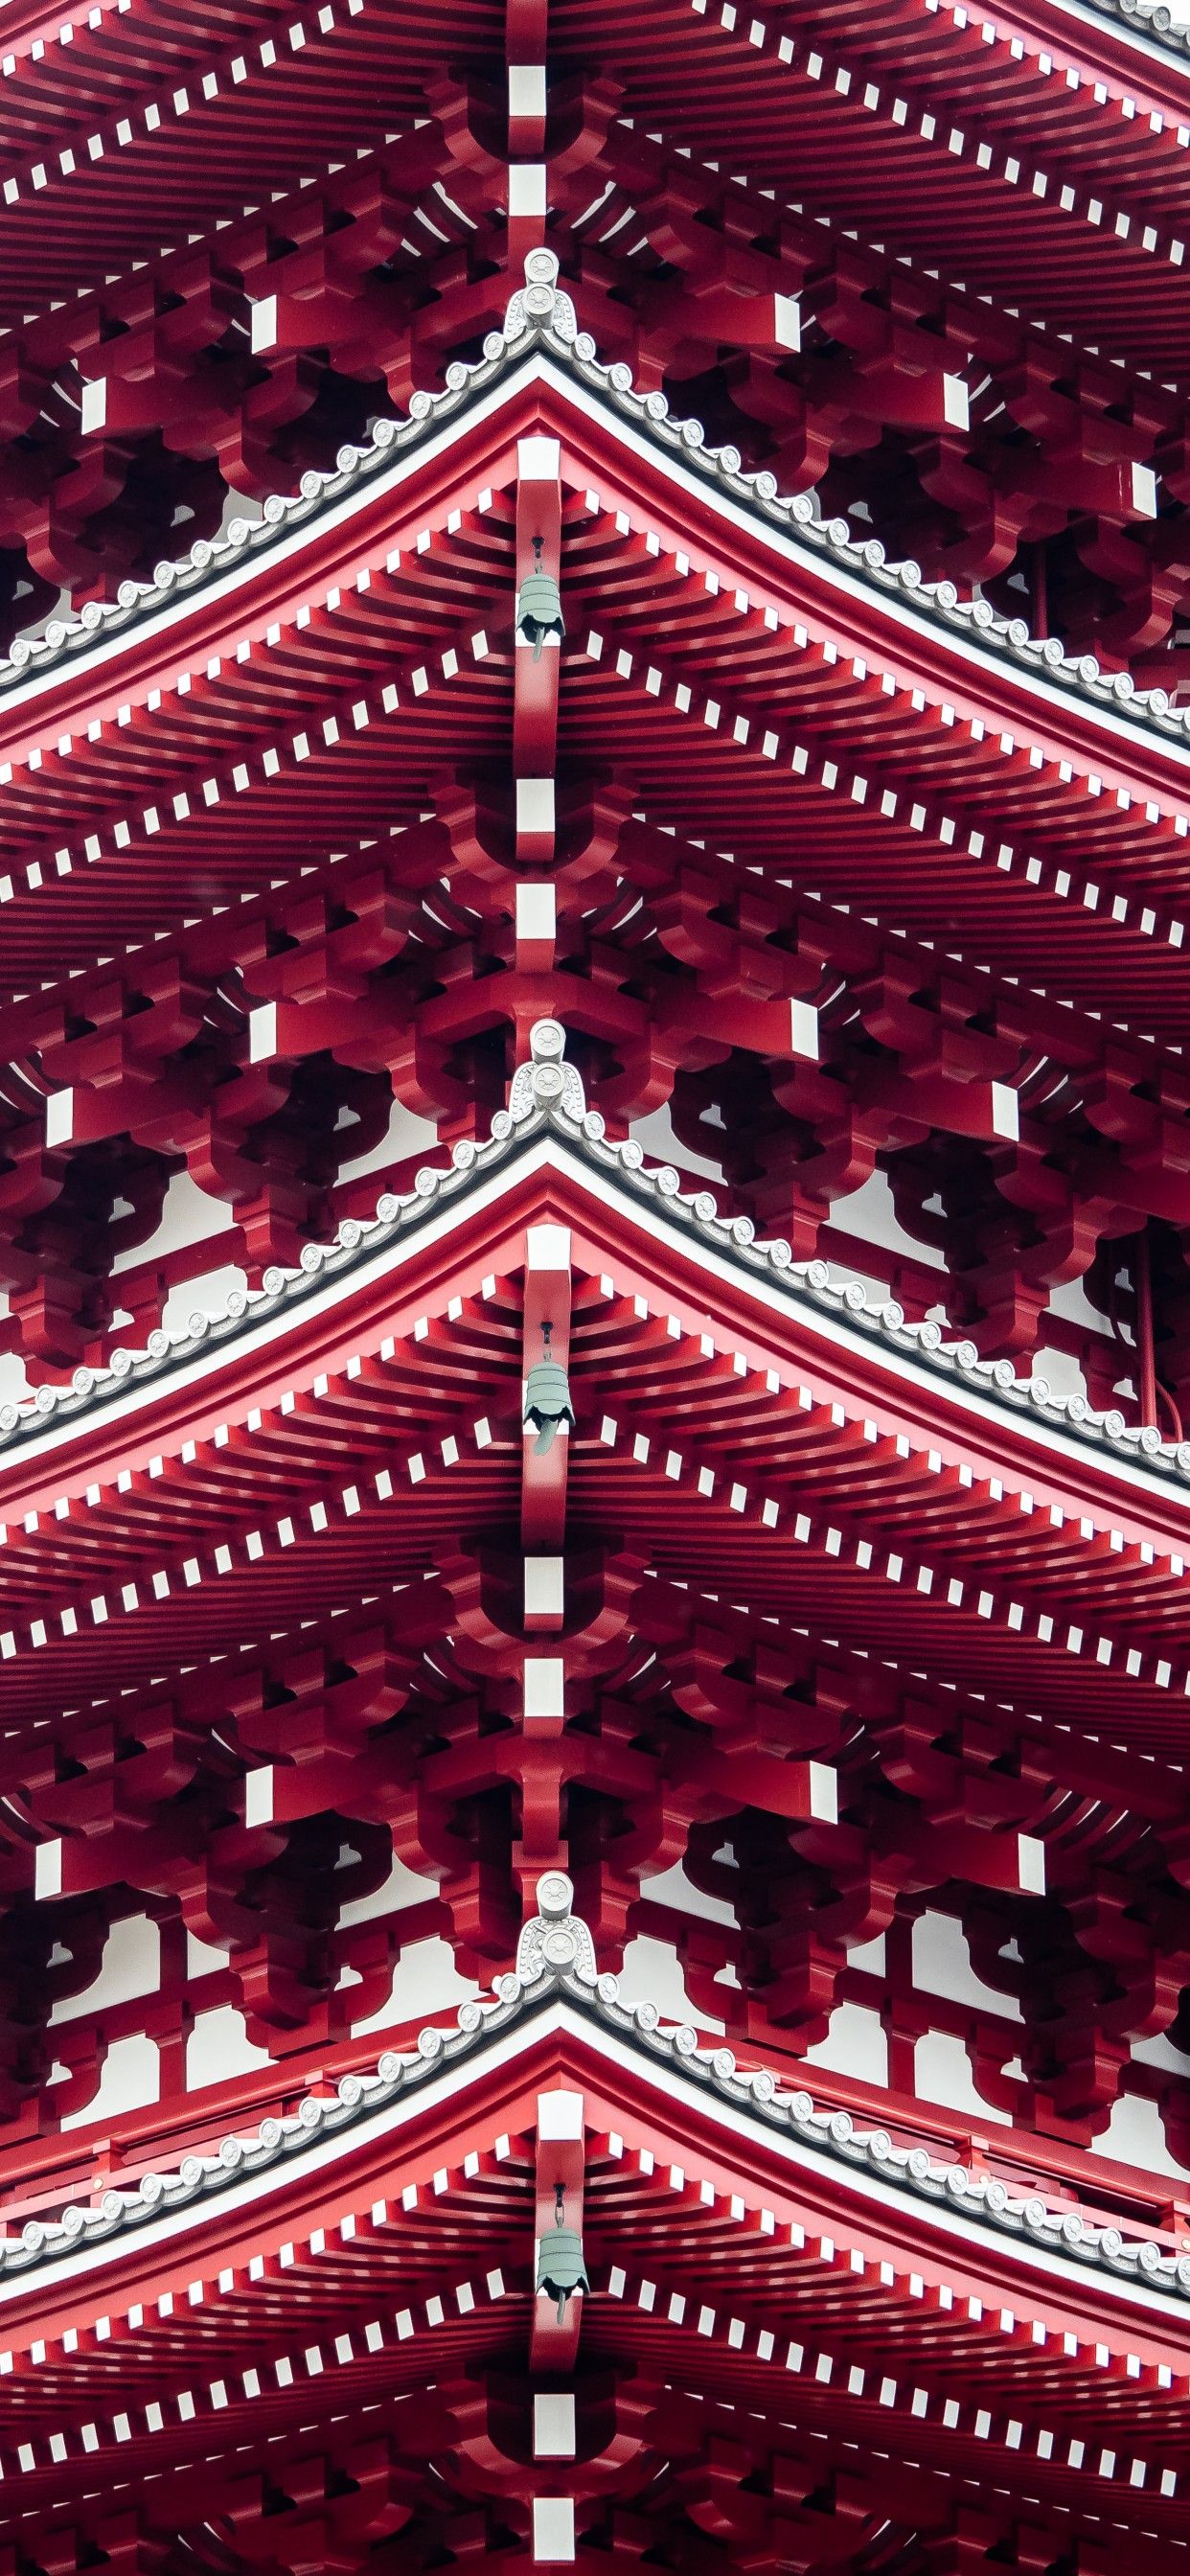 Pagoda 4K Wallpaper, Tokyo, Japan, Ancient architecture, Buddhism, Red, World